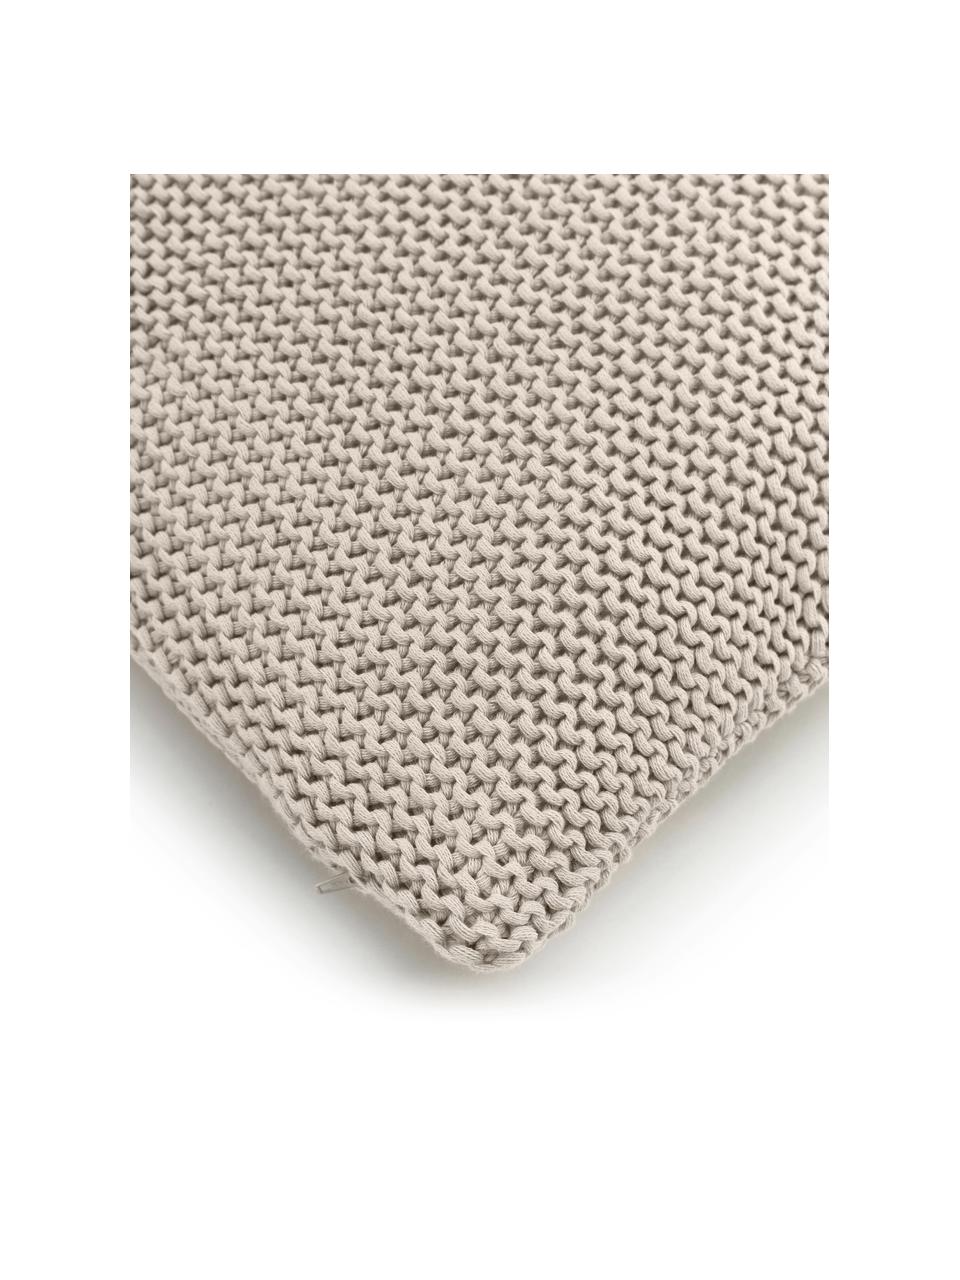 Strick-Kissenhülle Adalyn aus Bio-Baumwolle in Beige, 100% Bio-Baumwolle, GOTS-zertifiziert, Beige, 50 x 50 cm